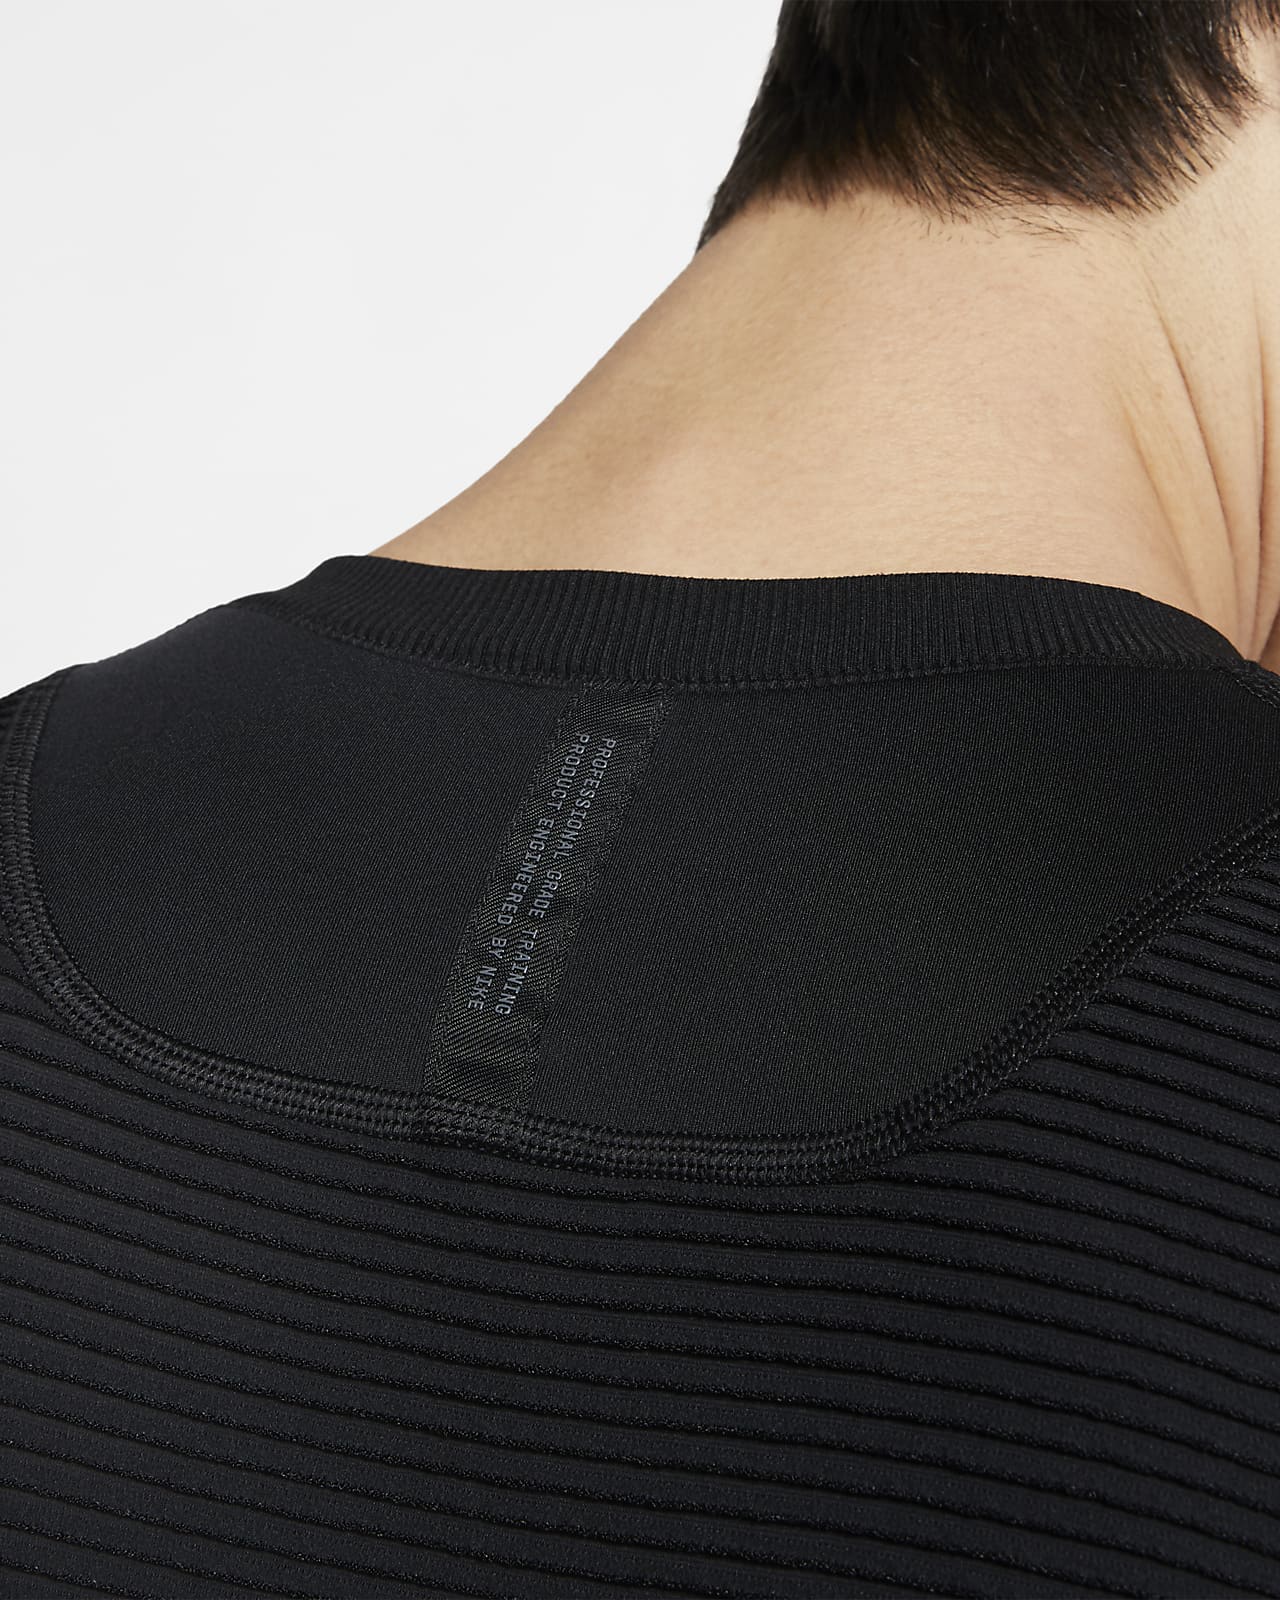 Nike Pro AeroAdapt Men's Short-Sleeve Top. Nike EG